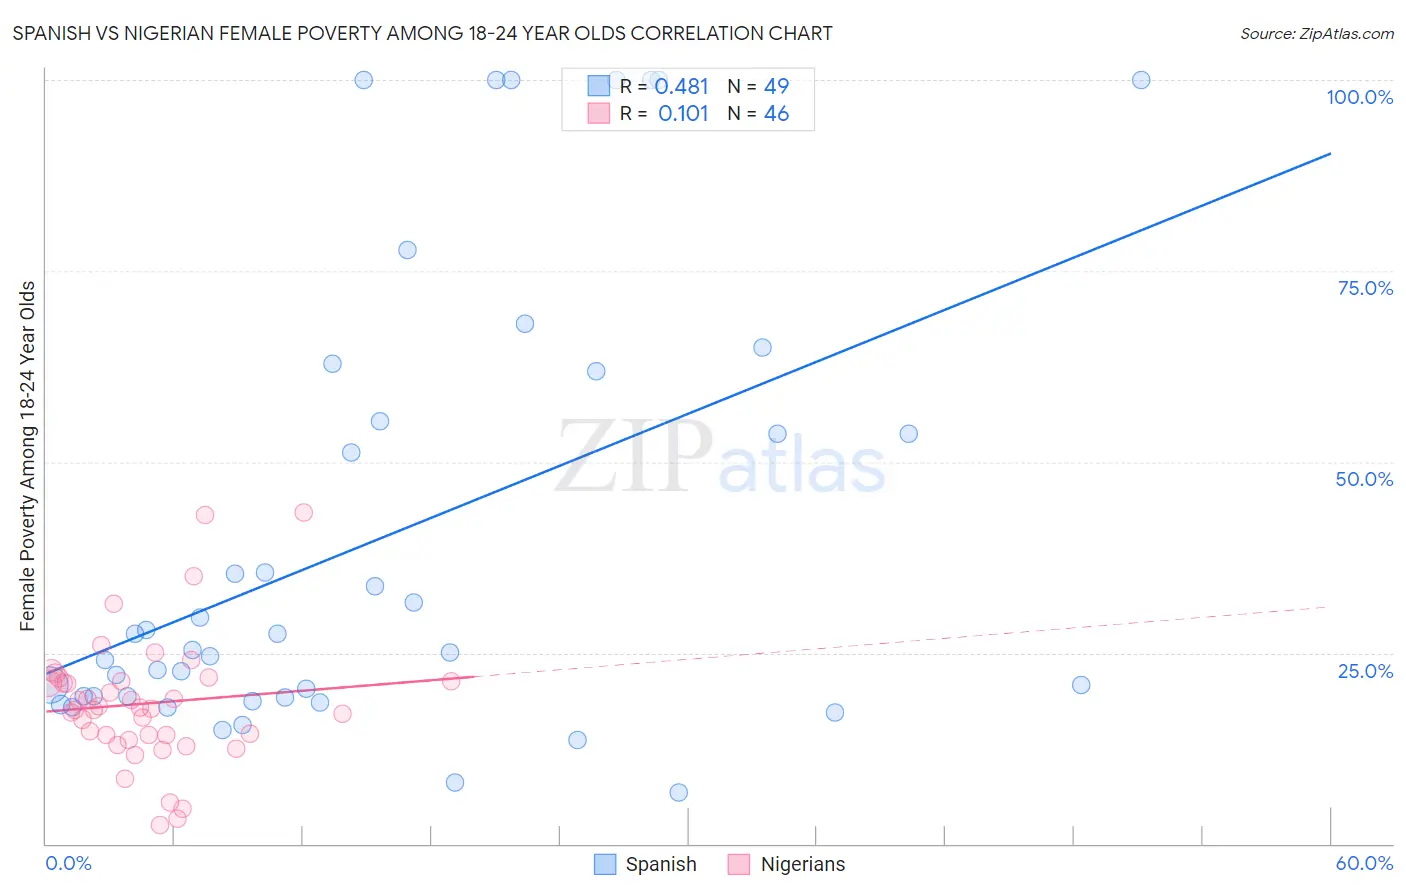 Spanish vs Nigerian Female Poverty Among 18-24 Year Olds